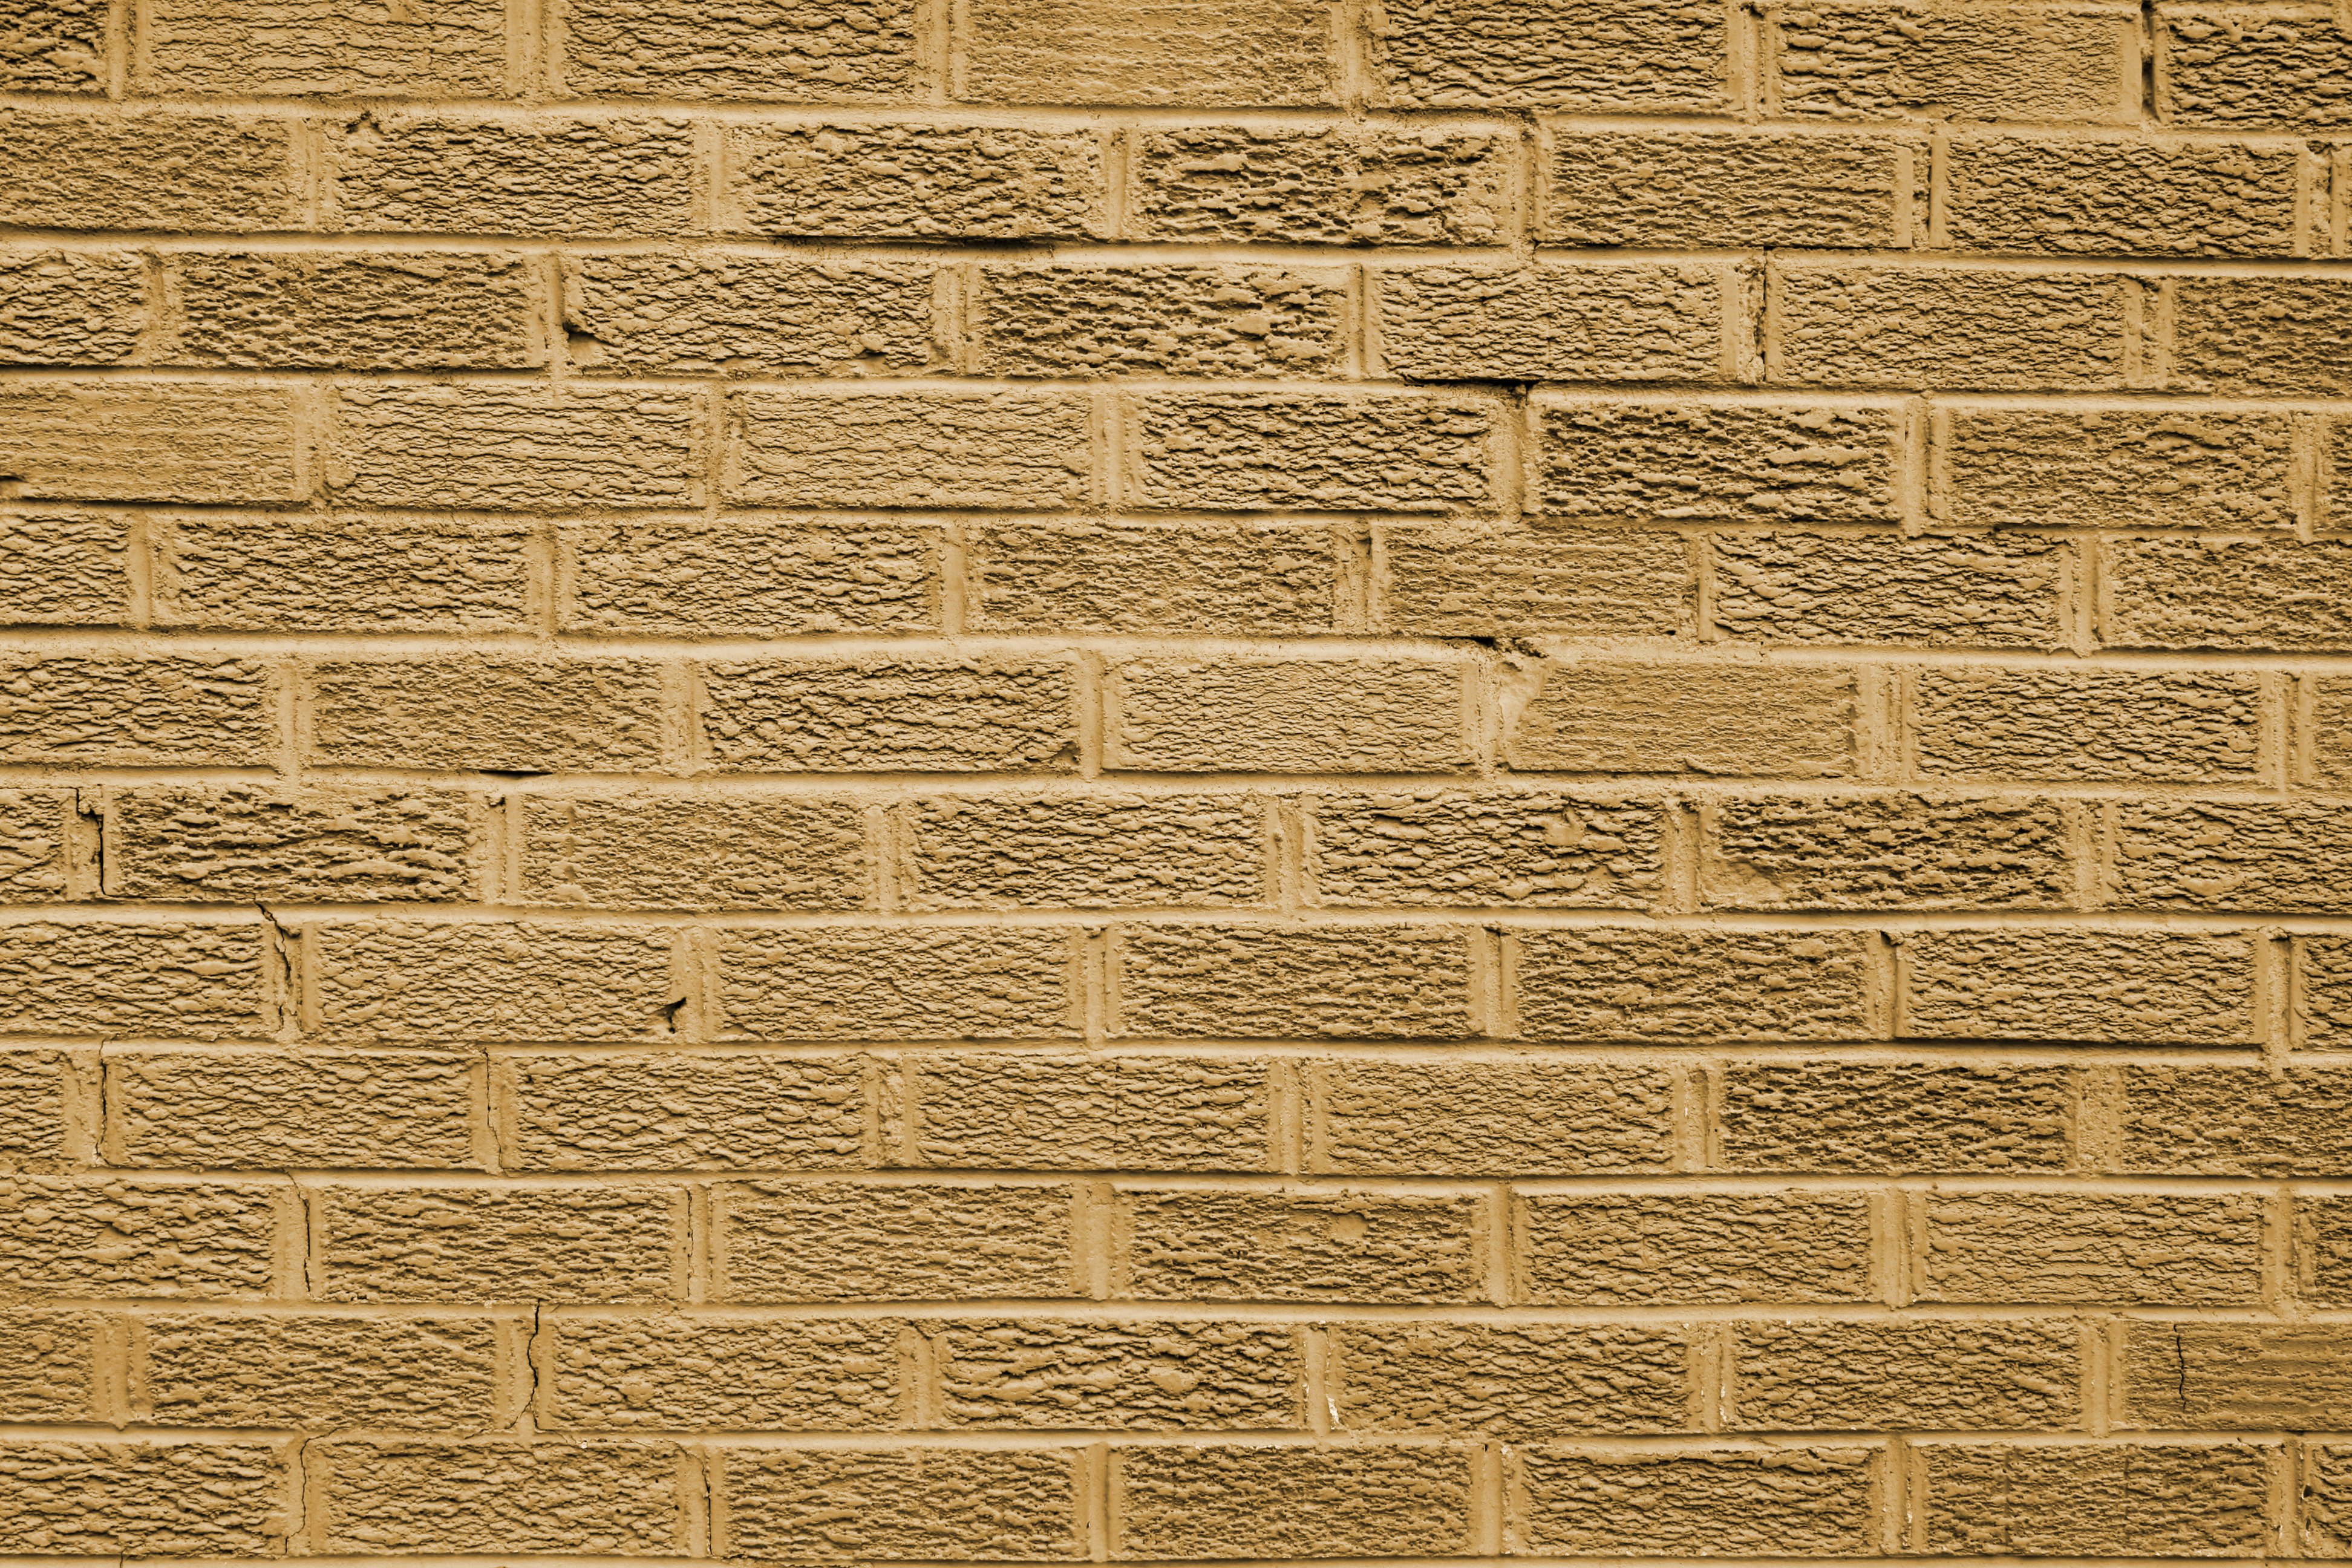 Tan Brick Wall Texture High Resolution Photo Dimensions